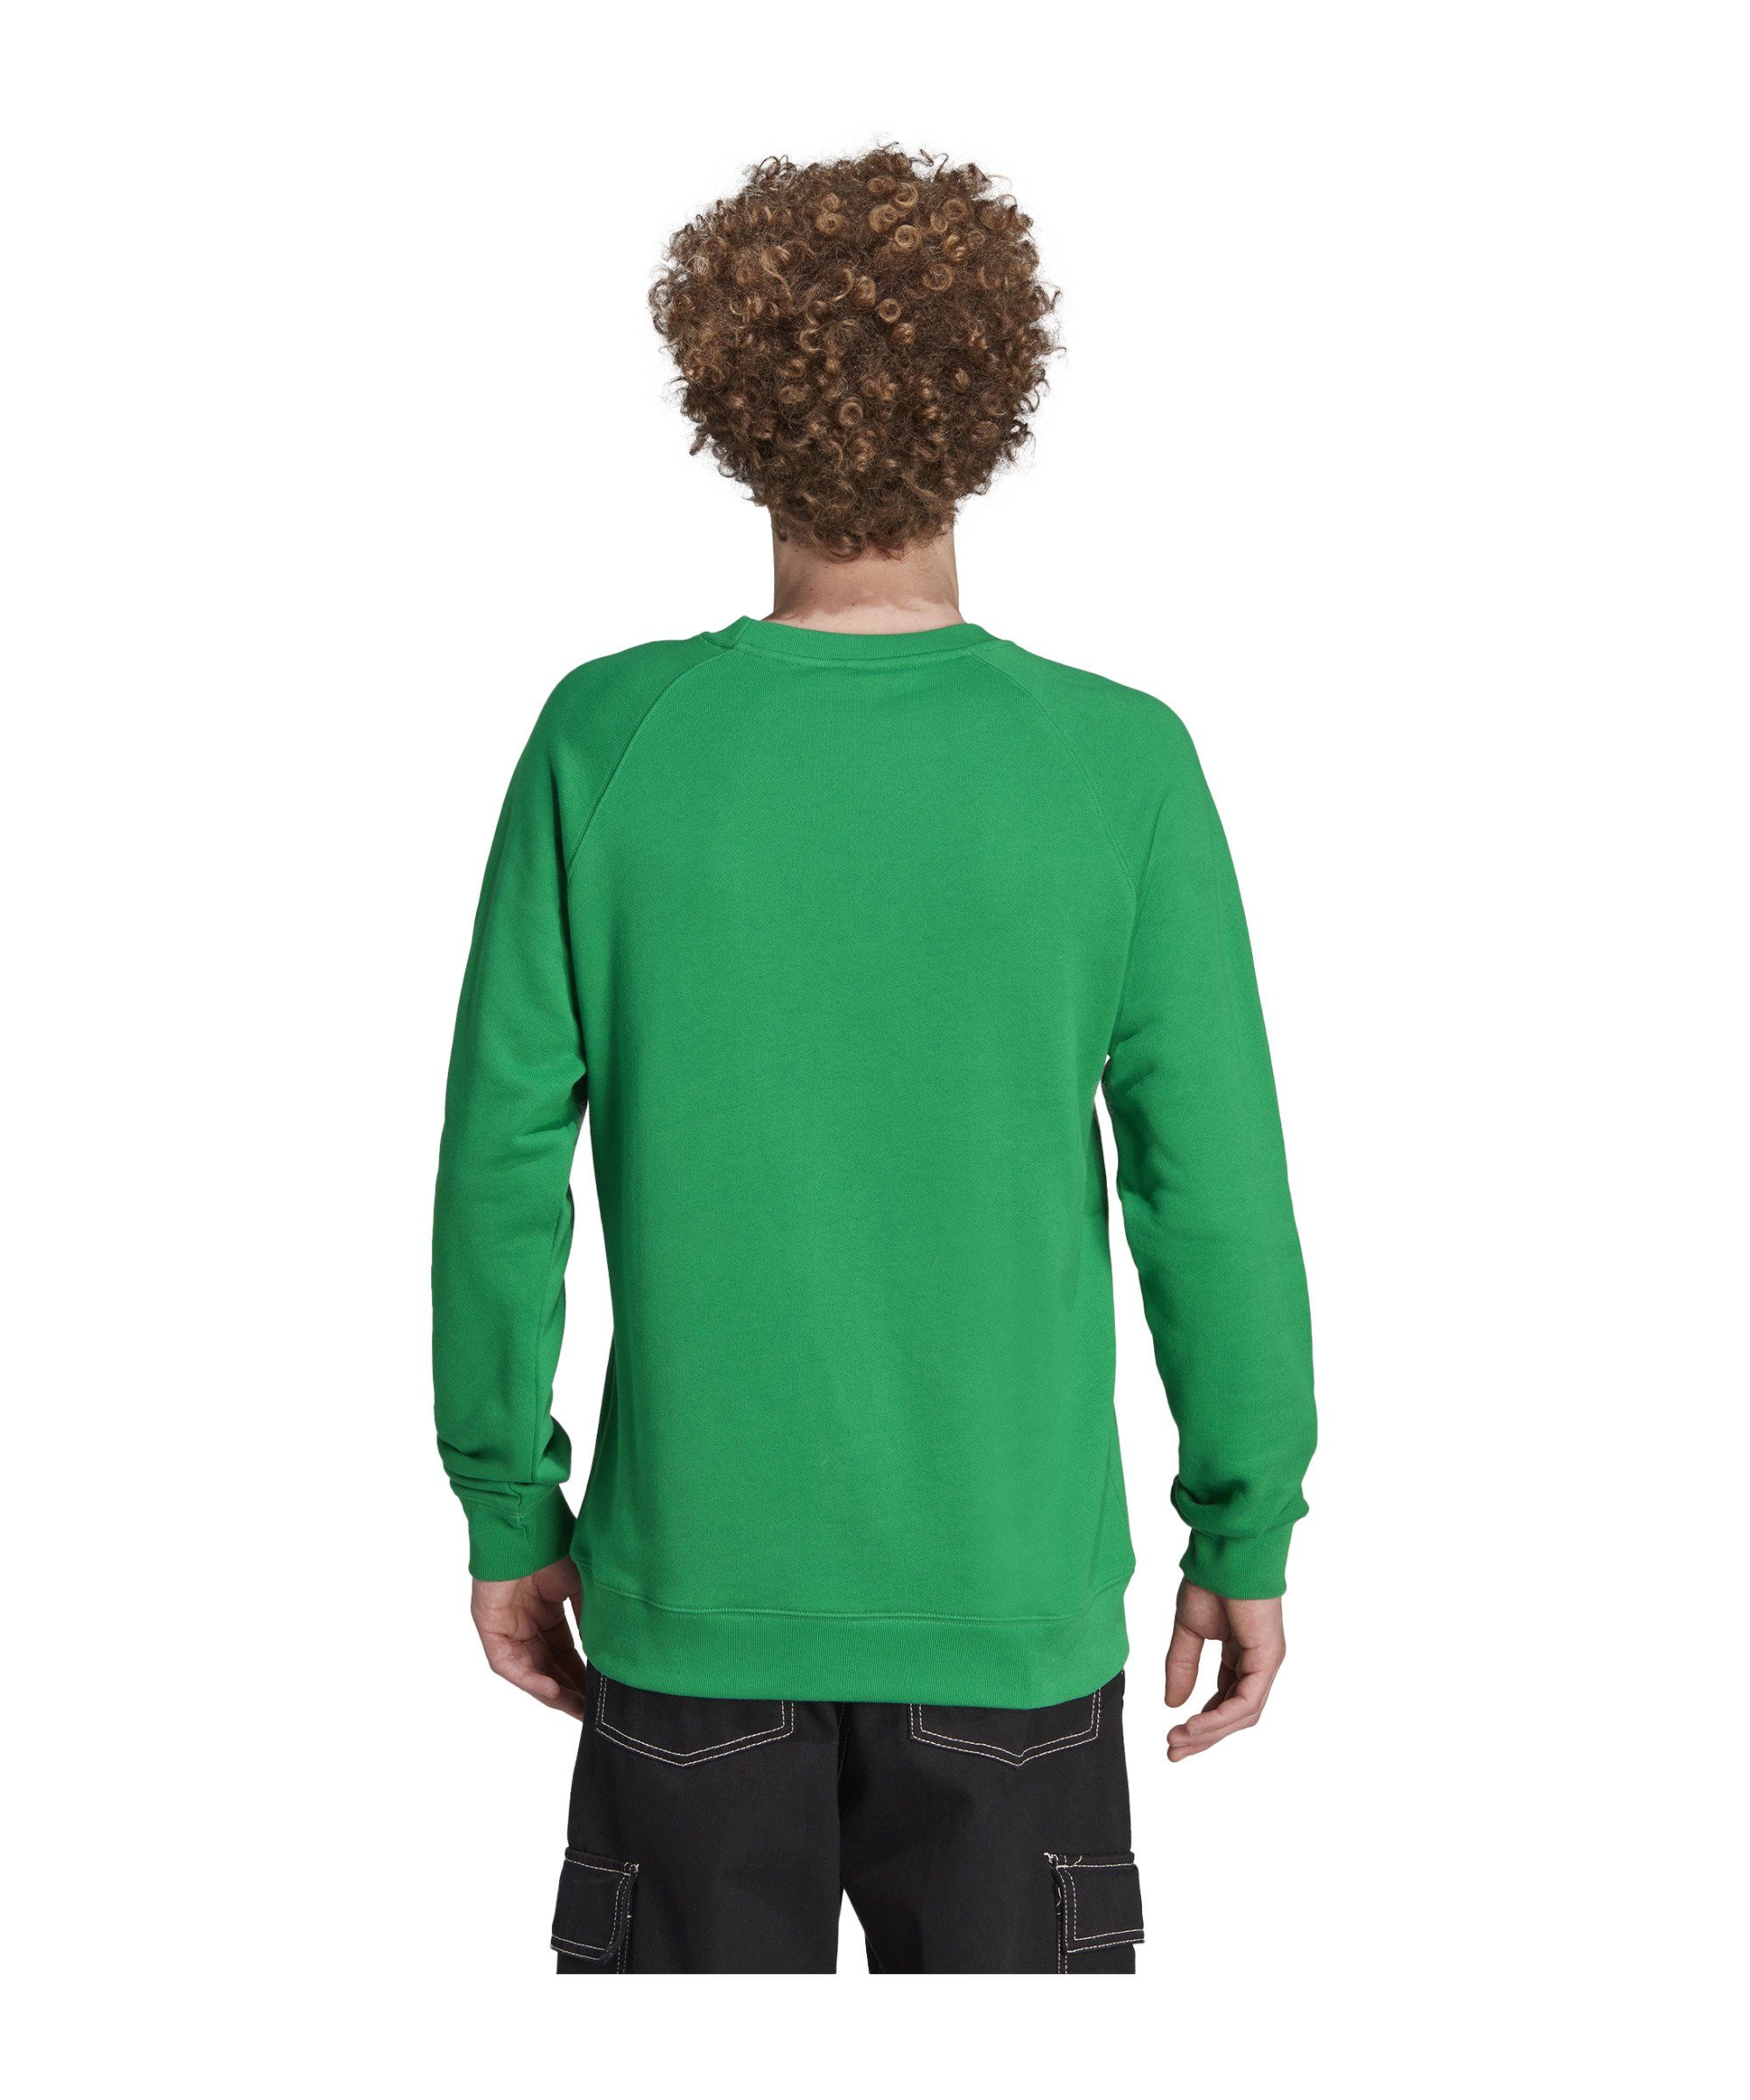 Sweatshirt Crew adidas Sweatshirt Trefoil Originals